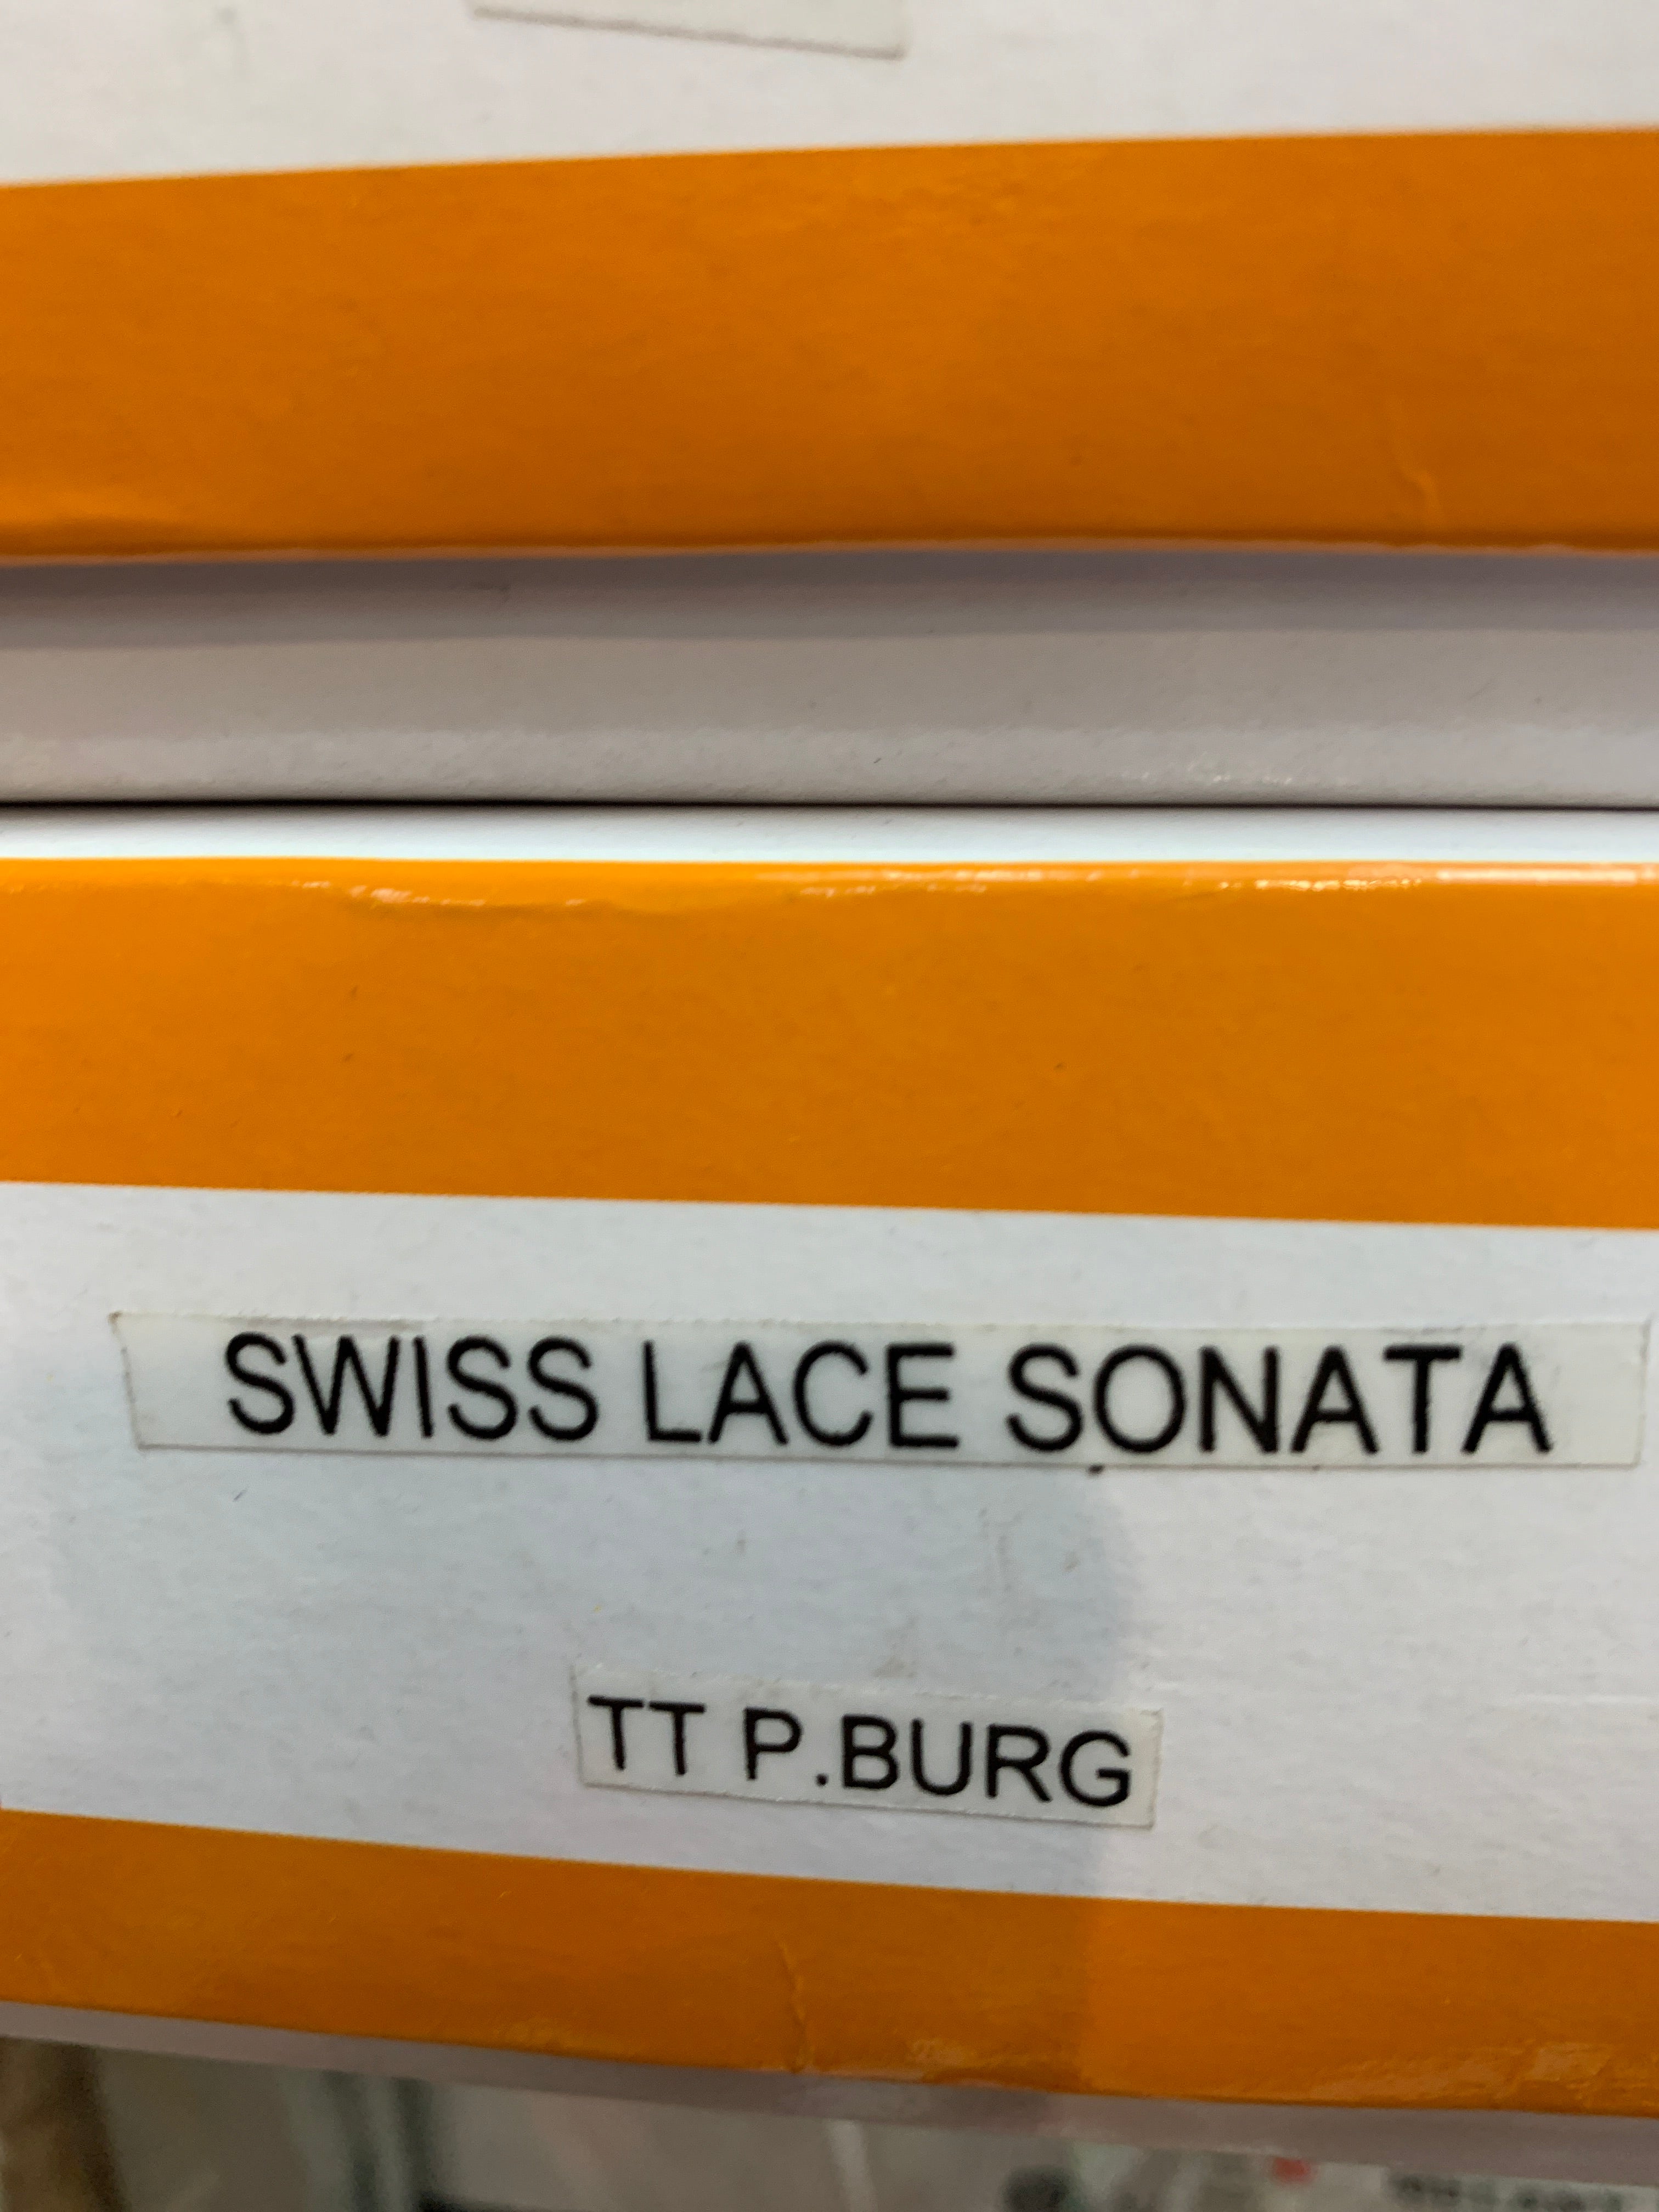 It’s a wig swiss lace sonata